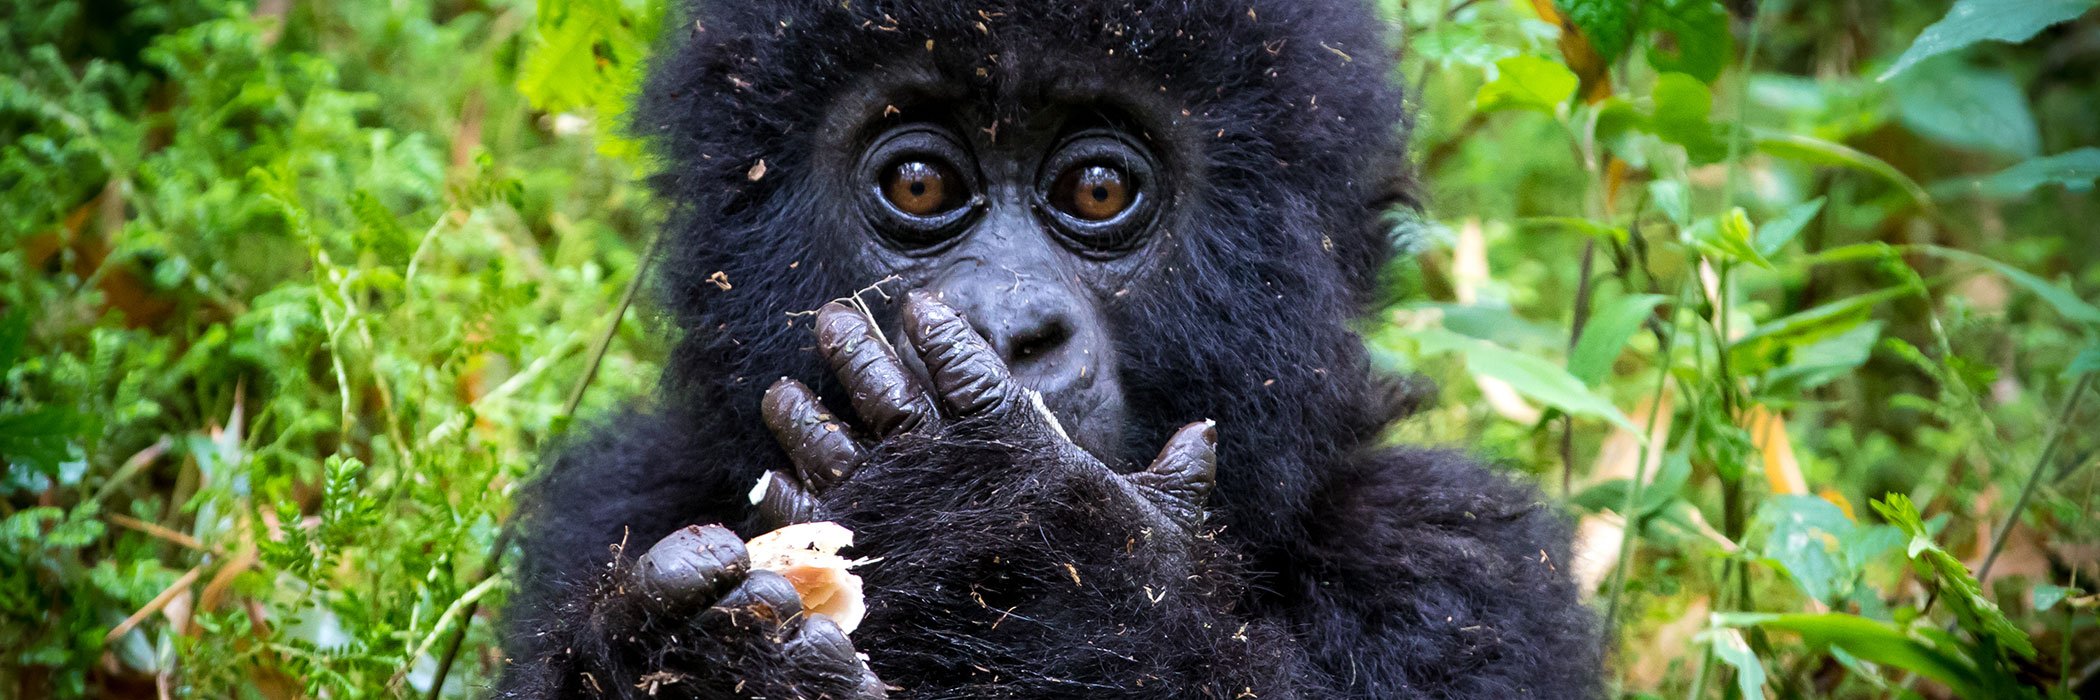 WWFGifts: Gorilla collection